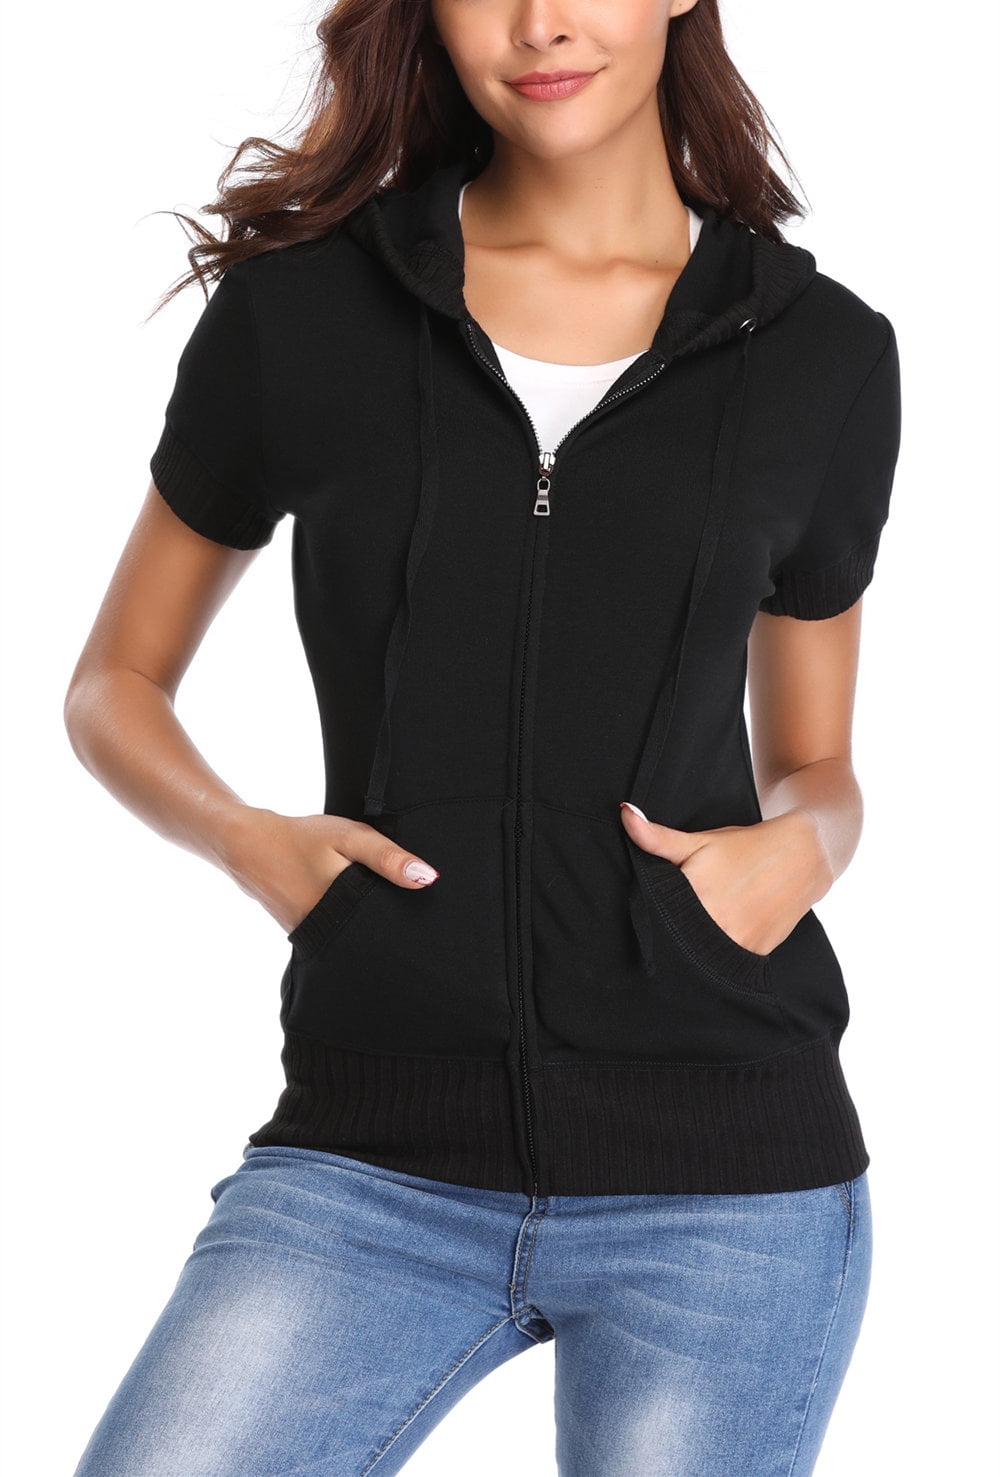 women's short sleeve black jacket